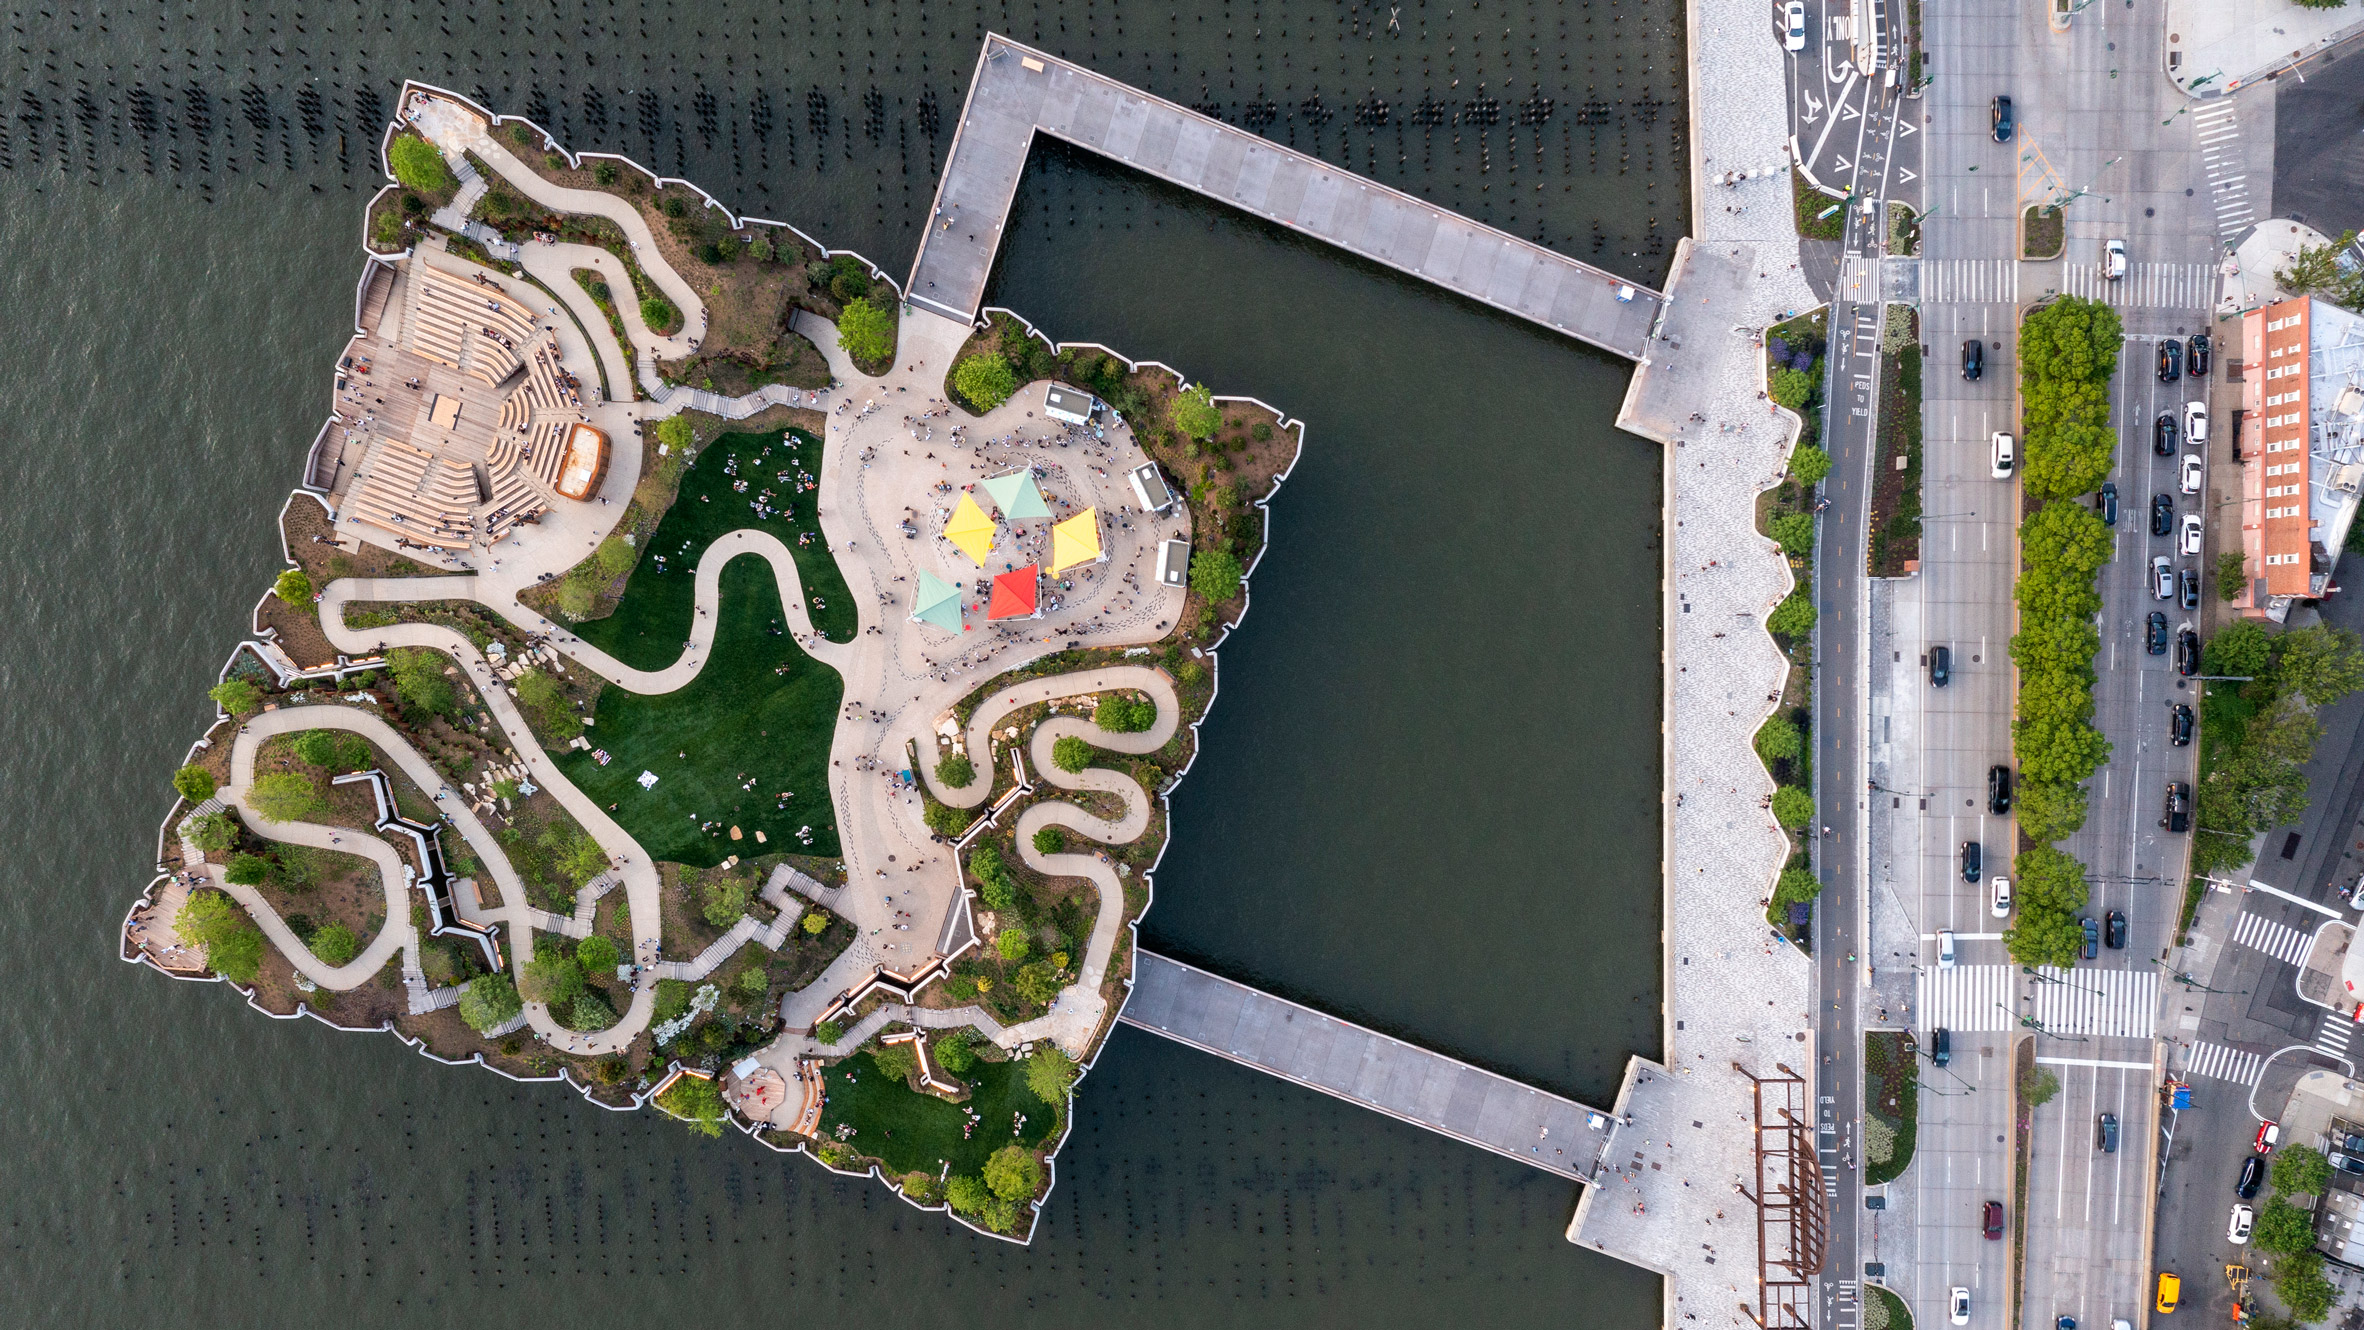 Photos reveal Thomas Heatherwick's Little Island in New York